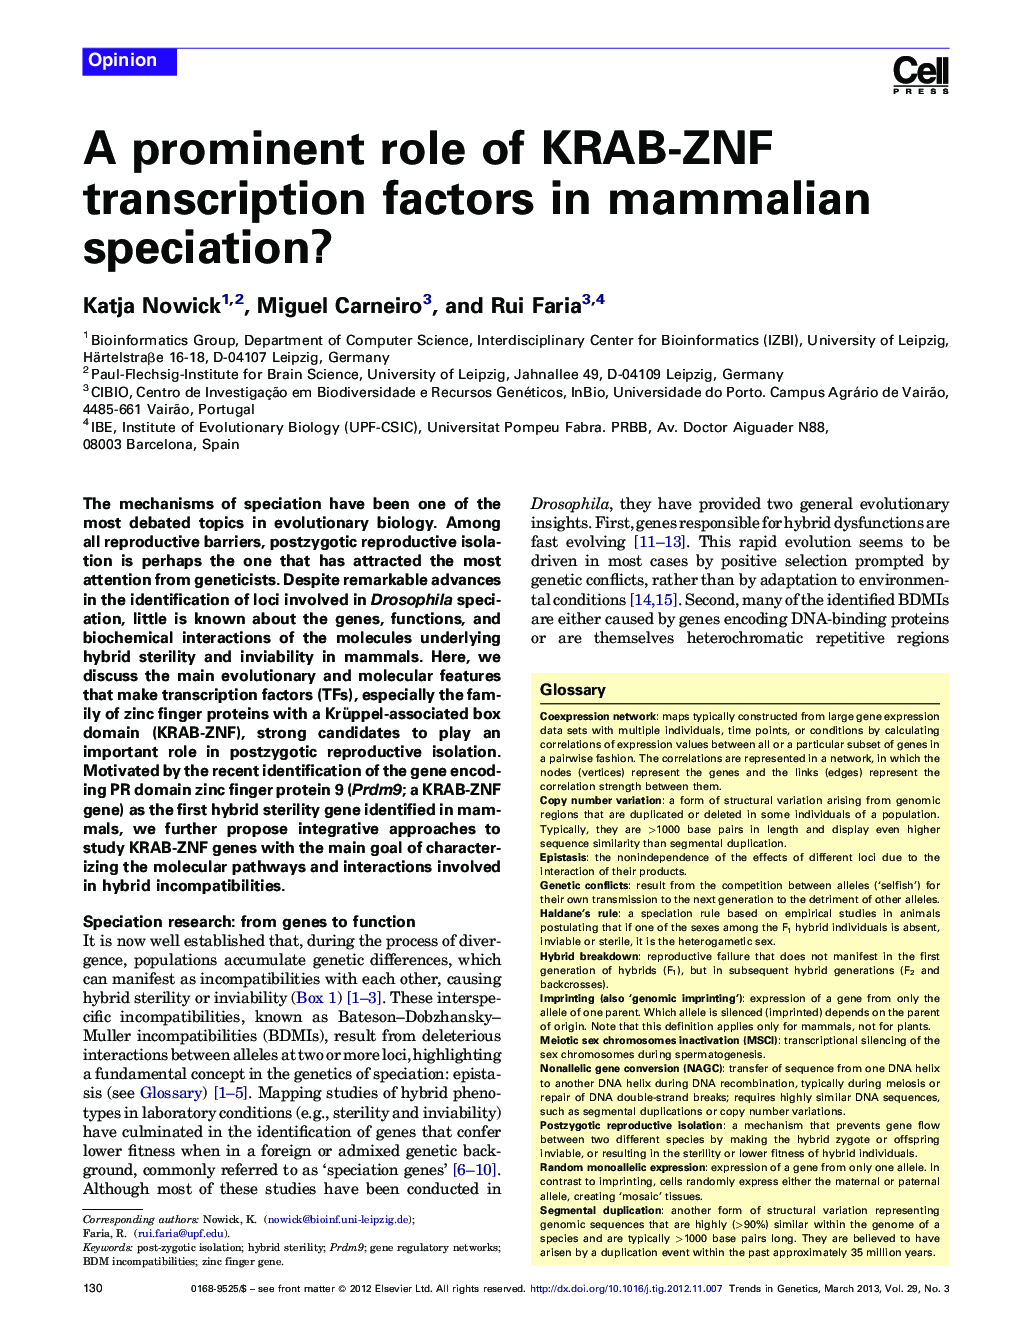 A prominent role of KRAB-ZNF transcription factors in mammalian speciation?